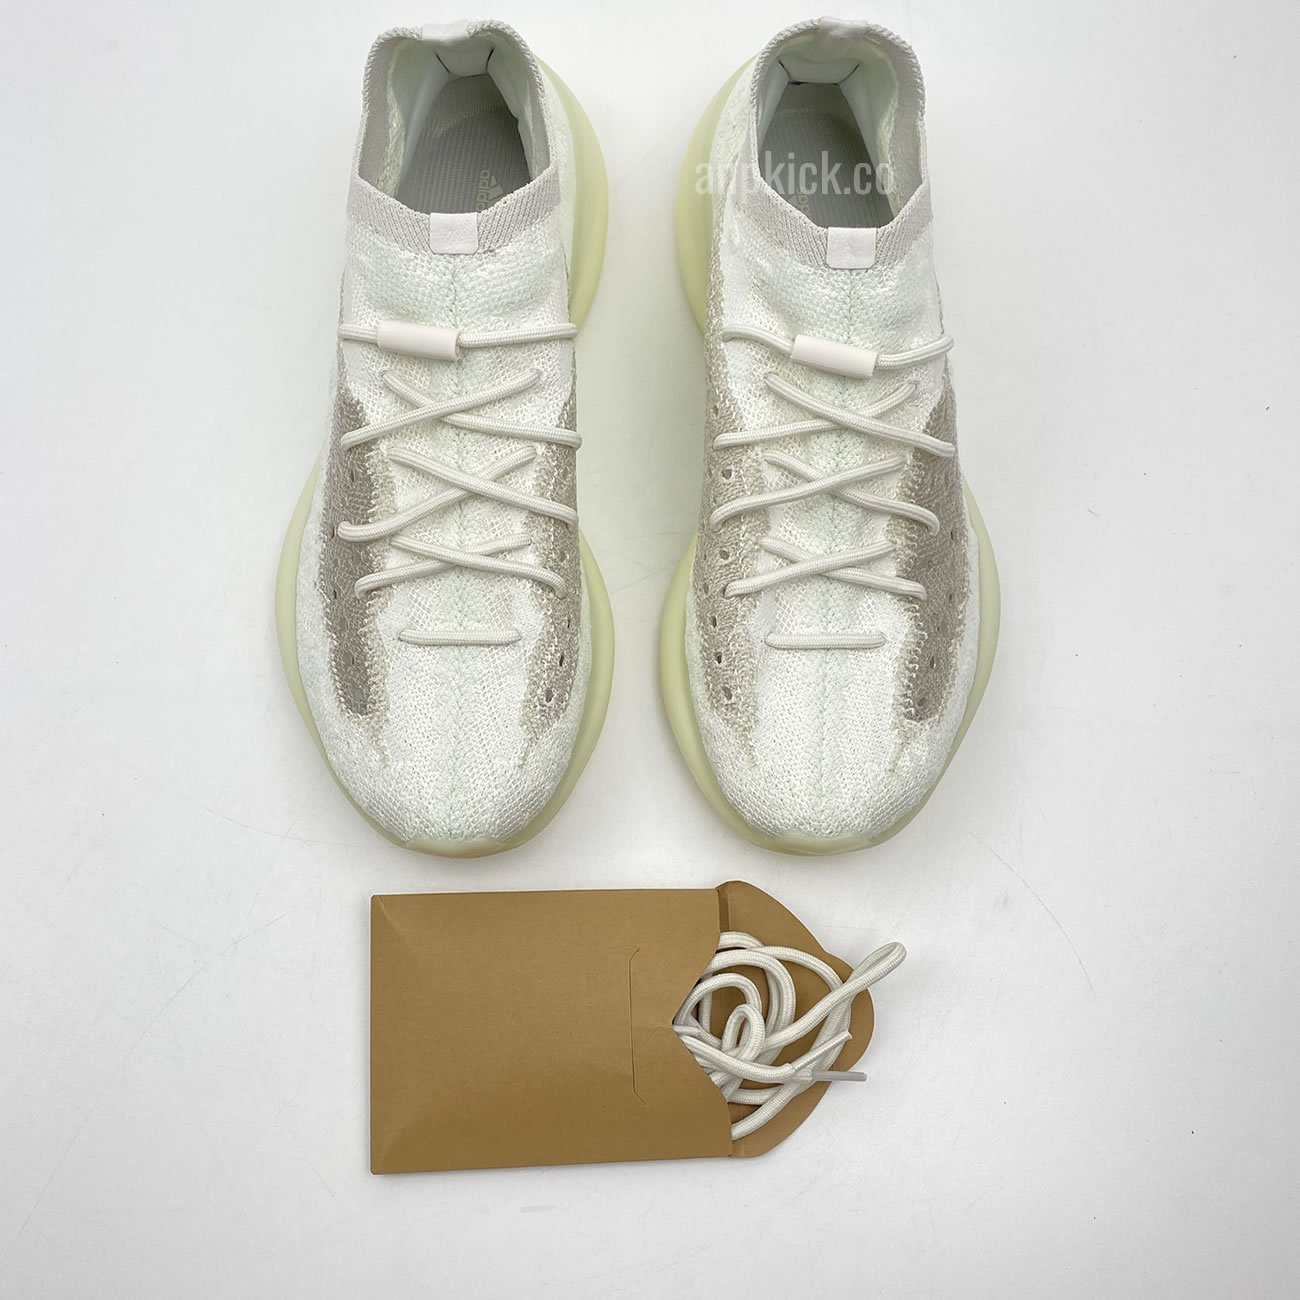 Adidas Yeezy Boost 380 Calcite Glow Release Date Gz8668 (6) - newkick.org